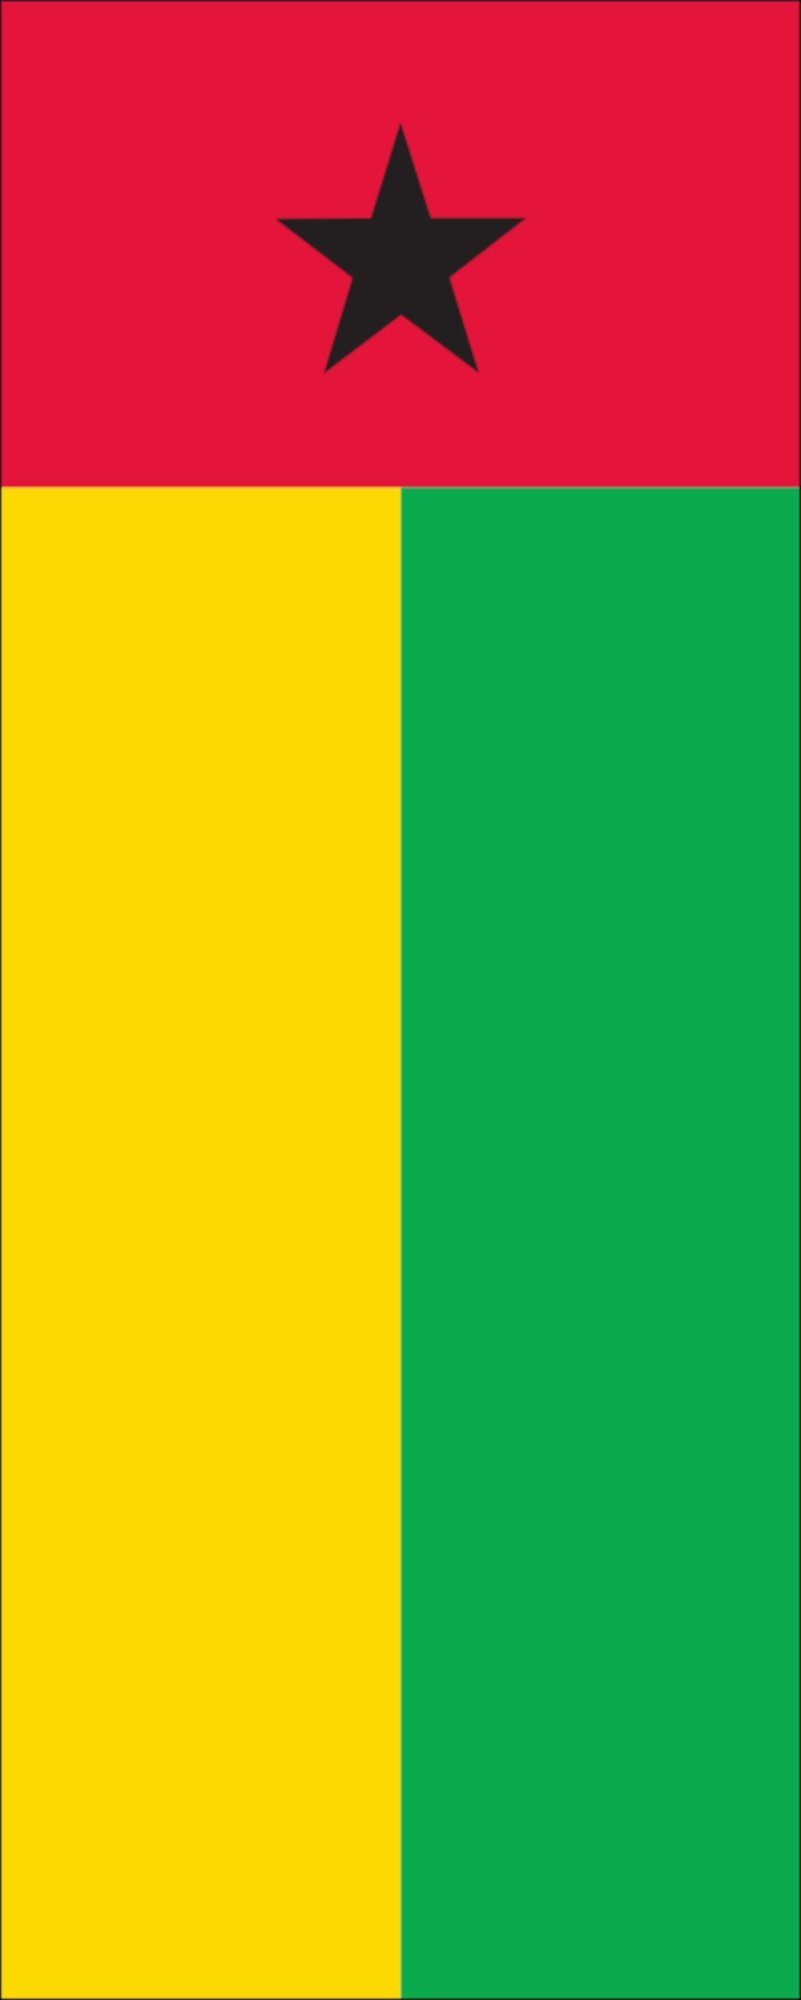 flaggenmeer Flagge Flagge Guinea-Bissau 110 g/m² Hochformat